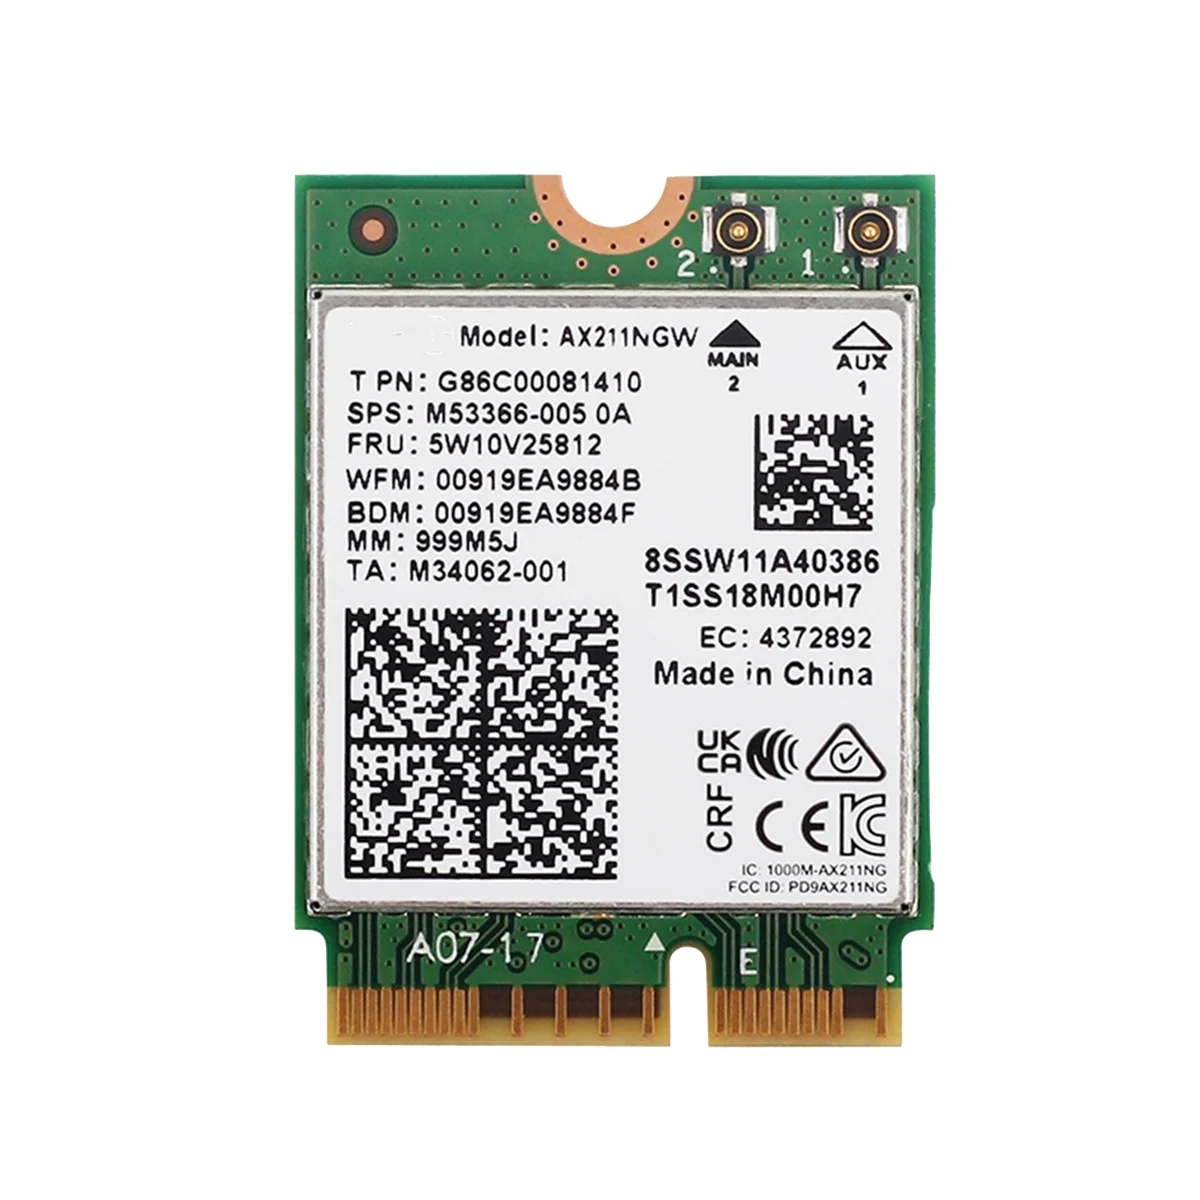 

AX211NGW WiFi 6E M.2 Key E CNVio2 Dual Band 2.4Ghz/5Ghz Wireless Network Card 802.11Ac Bluetooth 5.2 Adapter